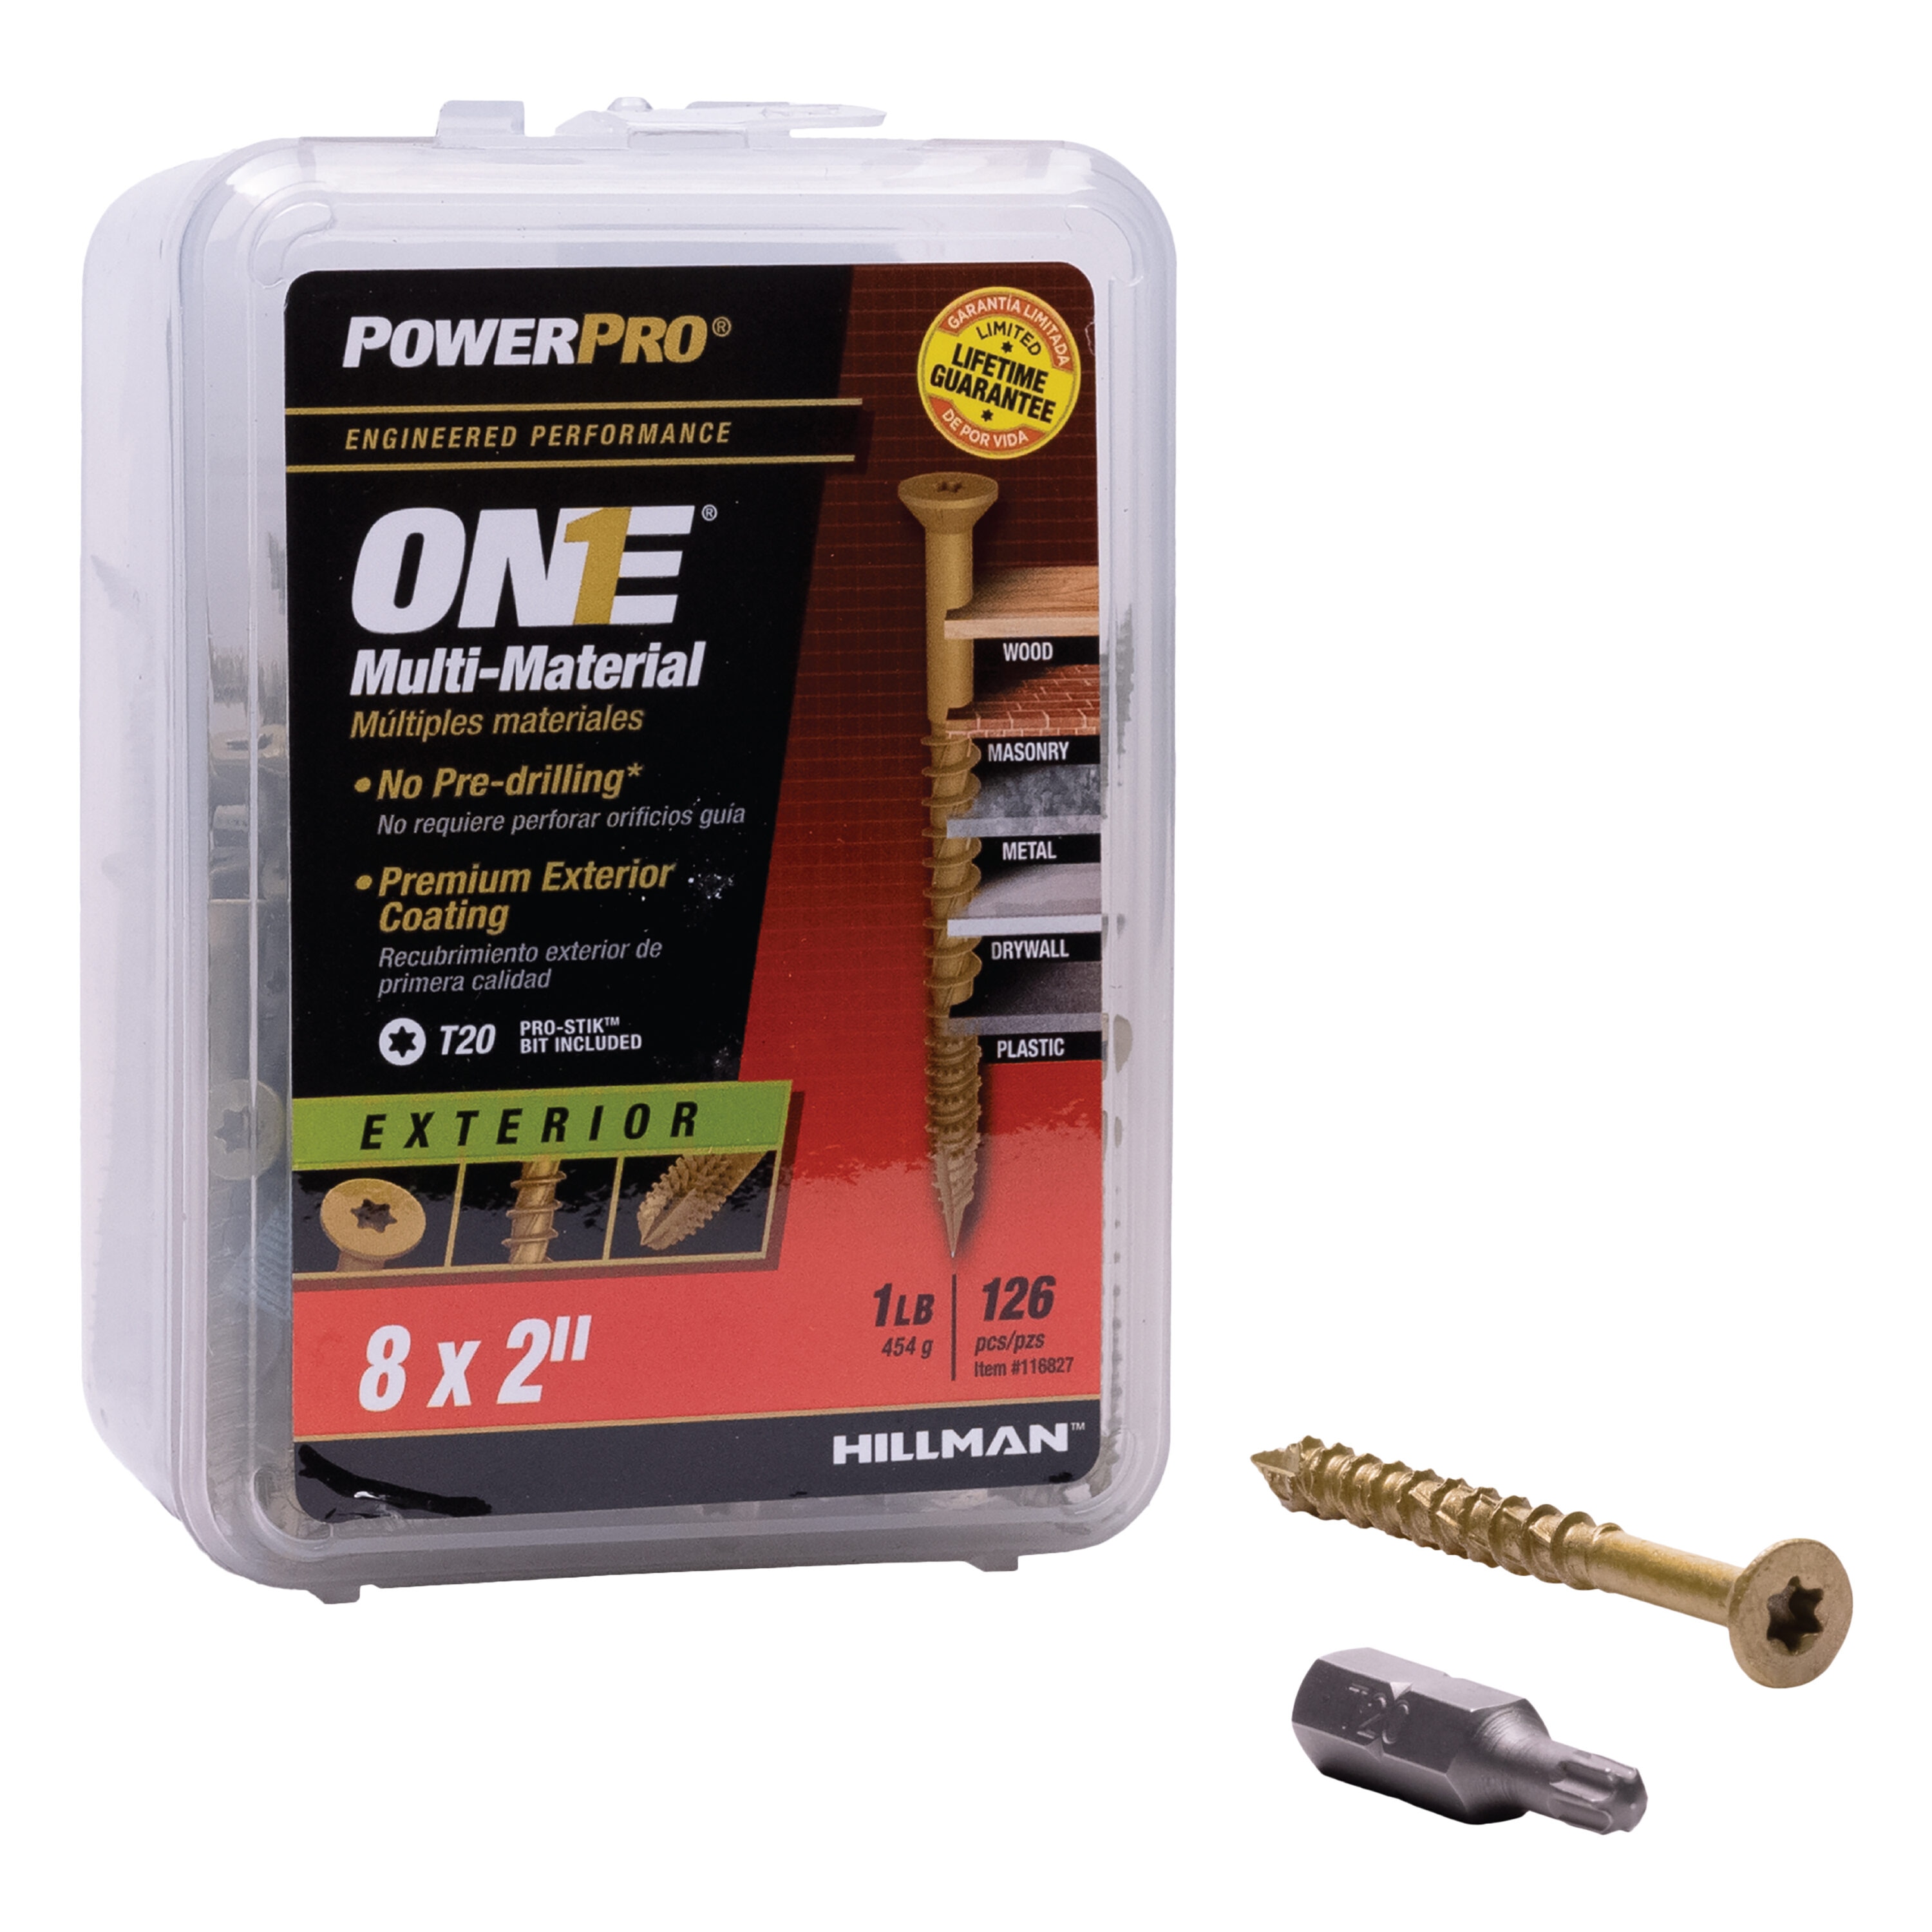 Power Pro Screws, Wood, Exterior, 3 Inch - 83 screws, 1 lb